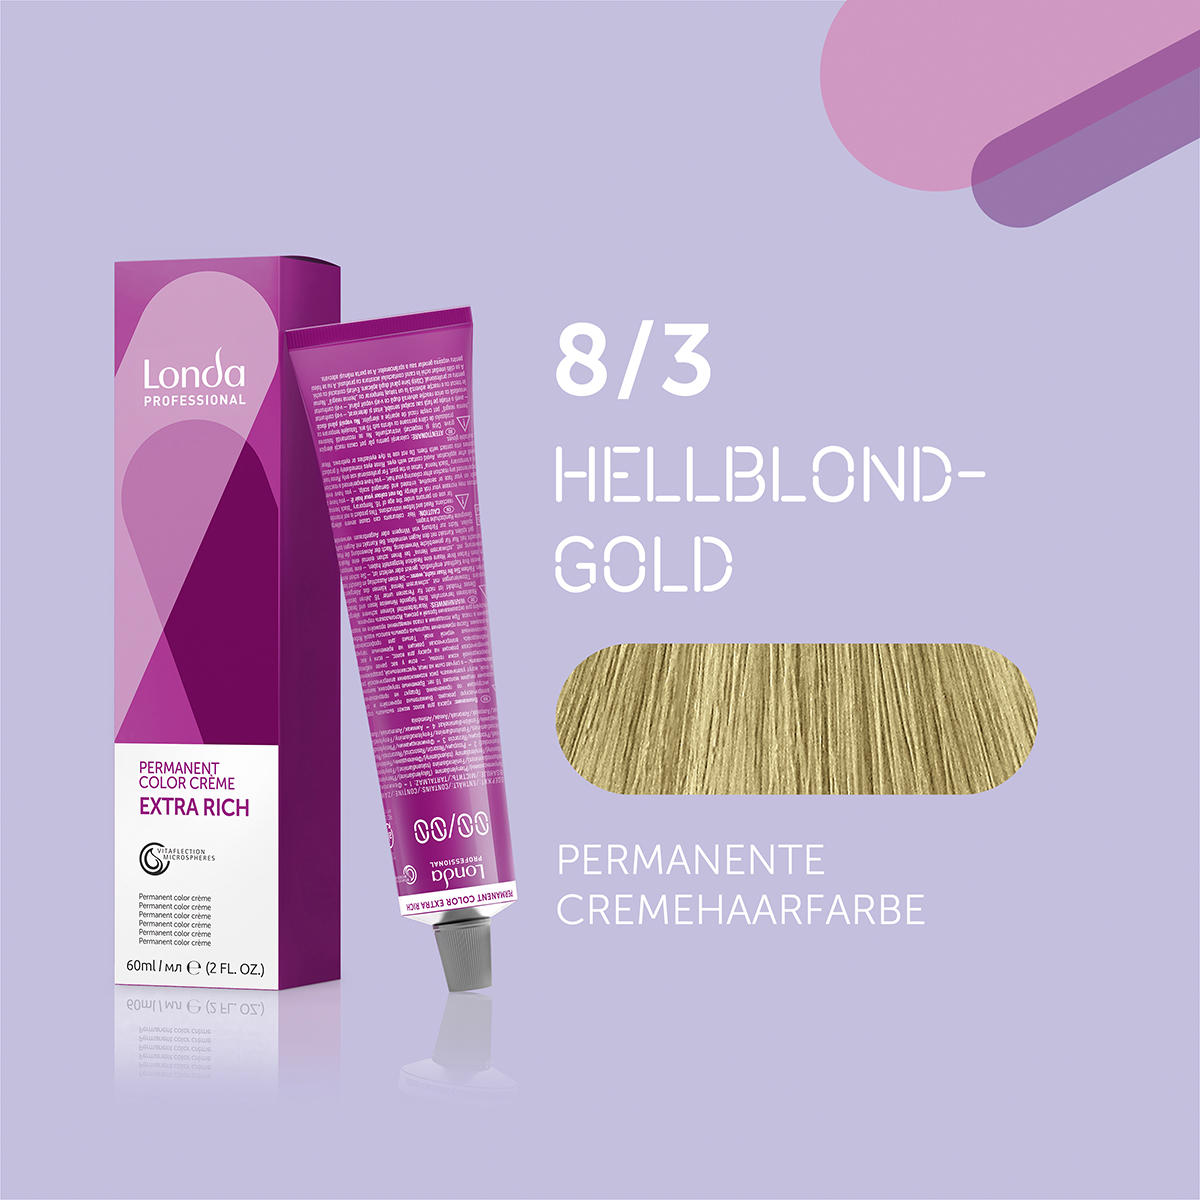 Londa Permanente Cremehaarfarbe Extra Rich 8/3 Hellblond Gold, Tube 60 ml